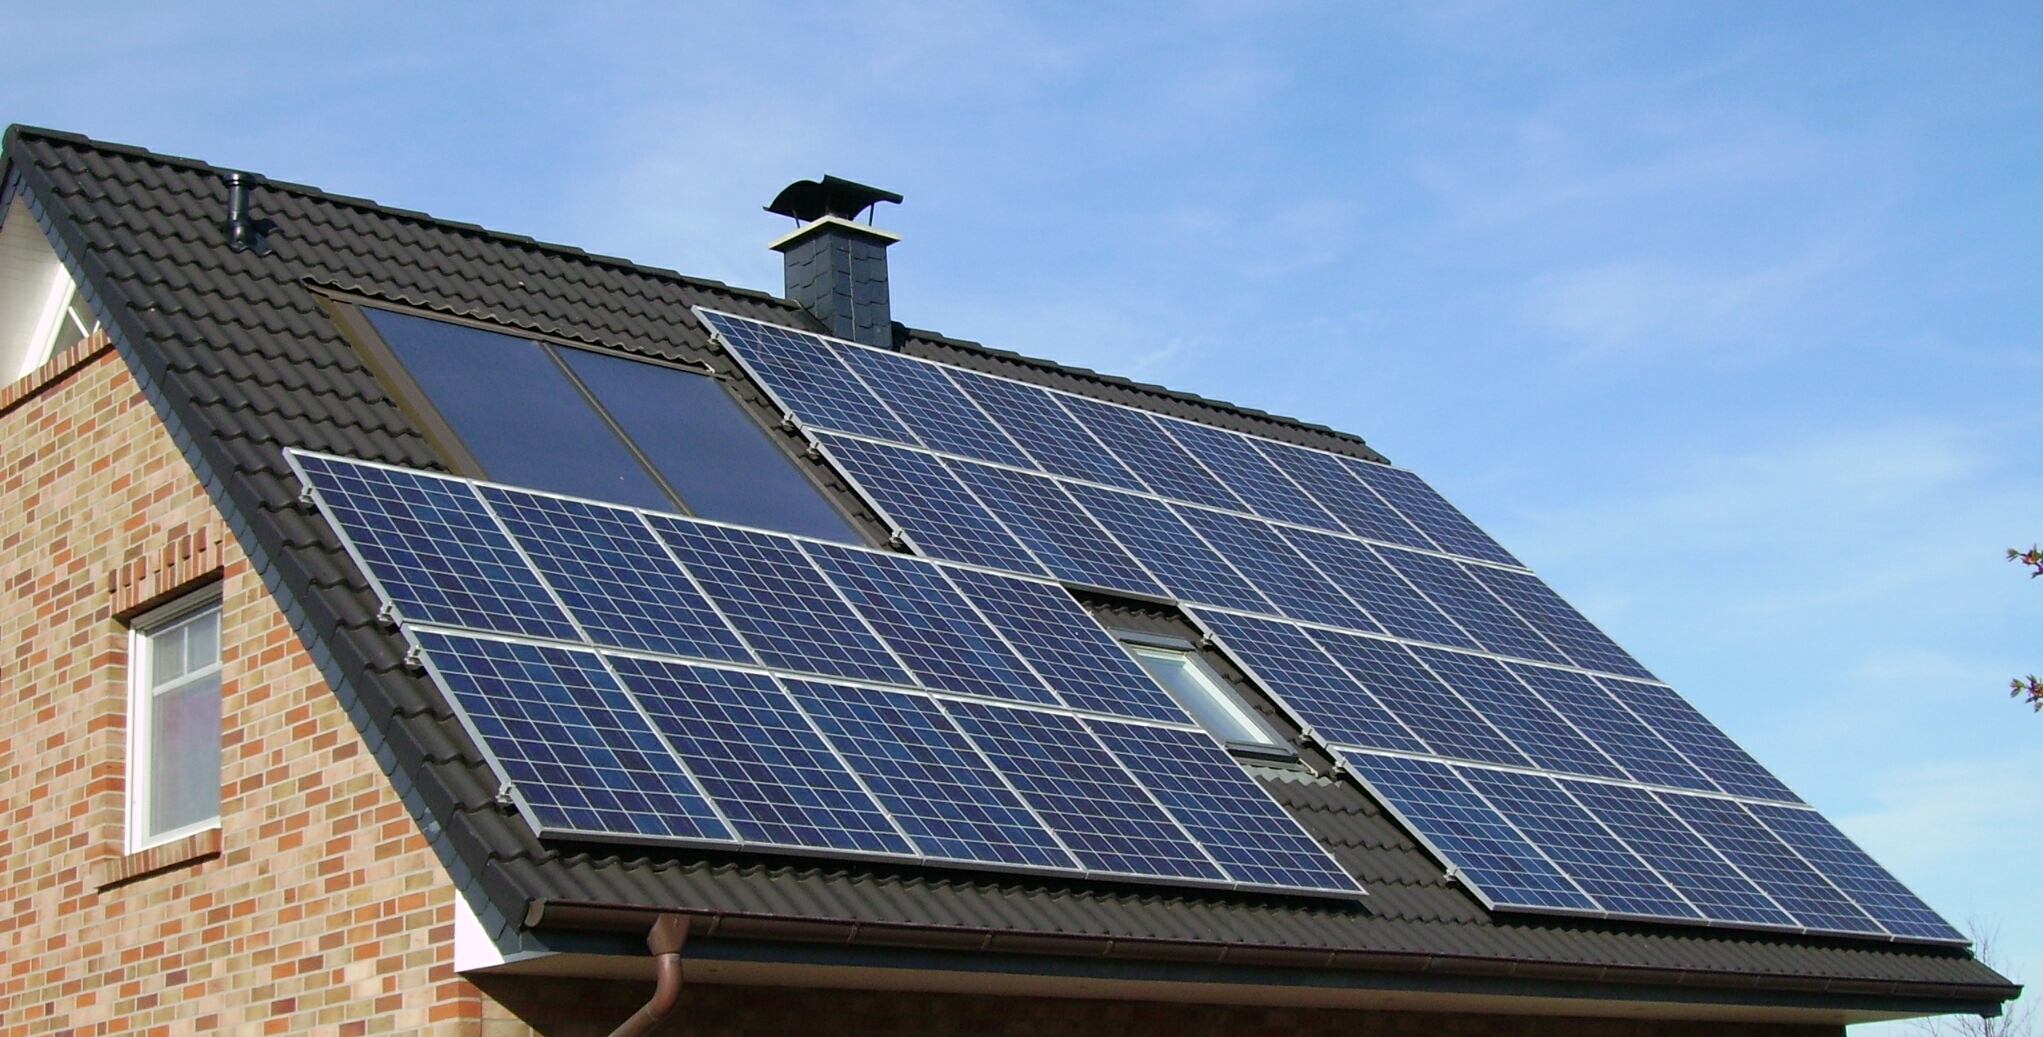 Solar panels on a roof.jpg